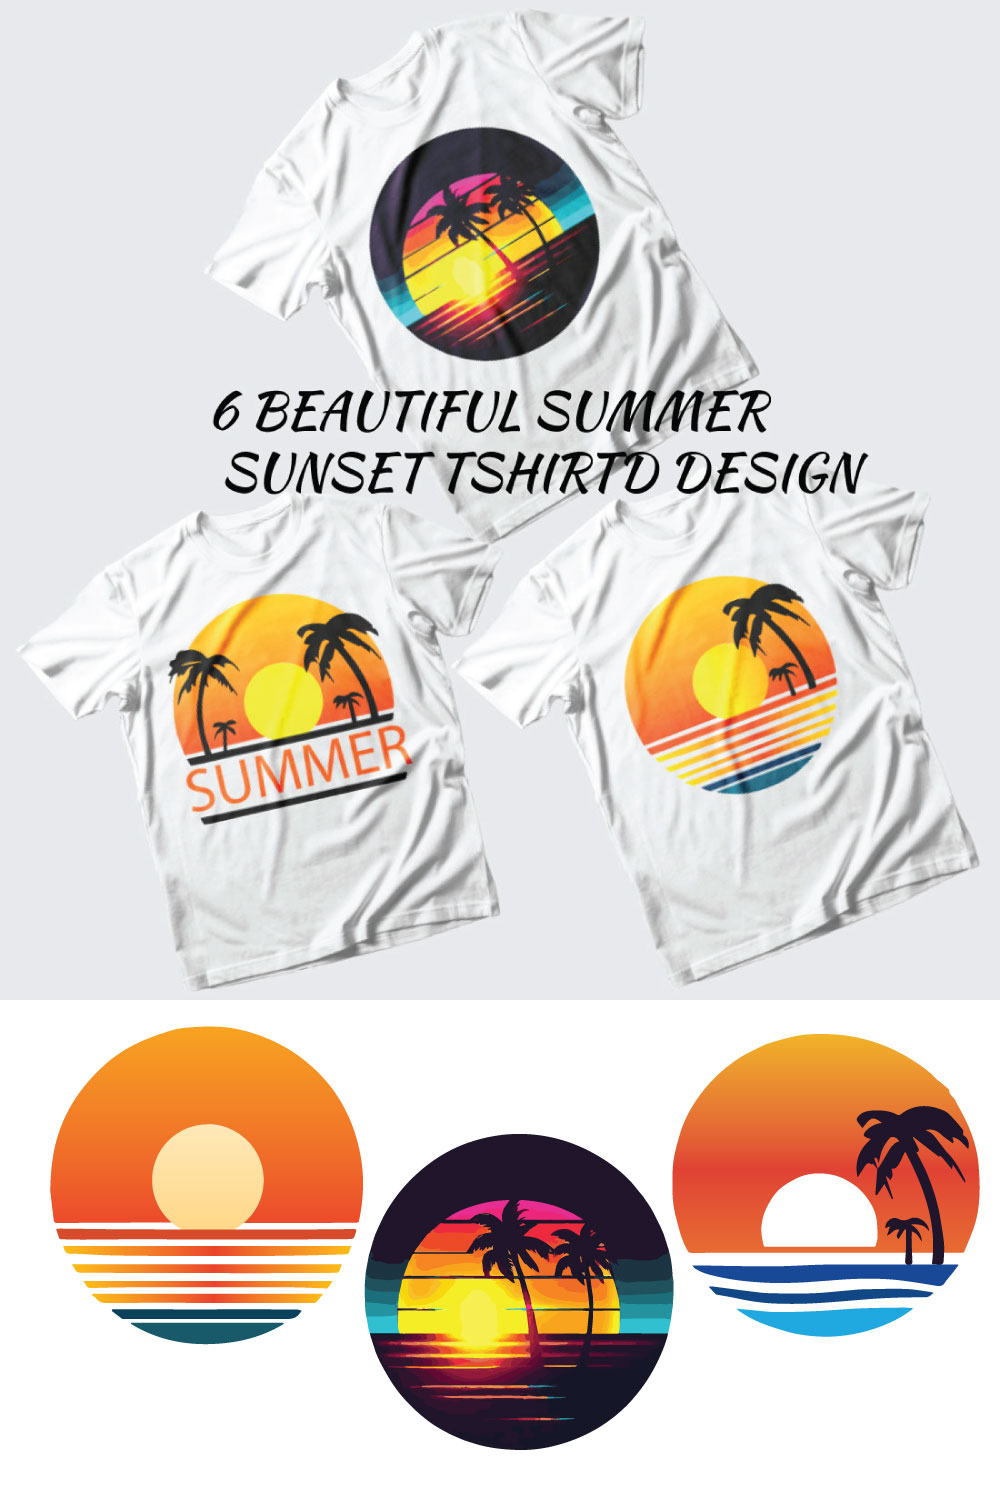 6 Beautiful summer sunset t-shirts design pinterest preview image.